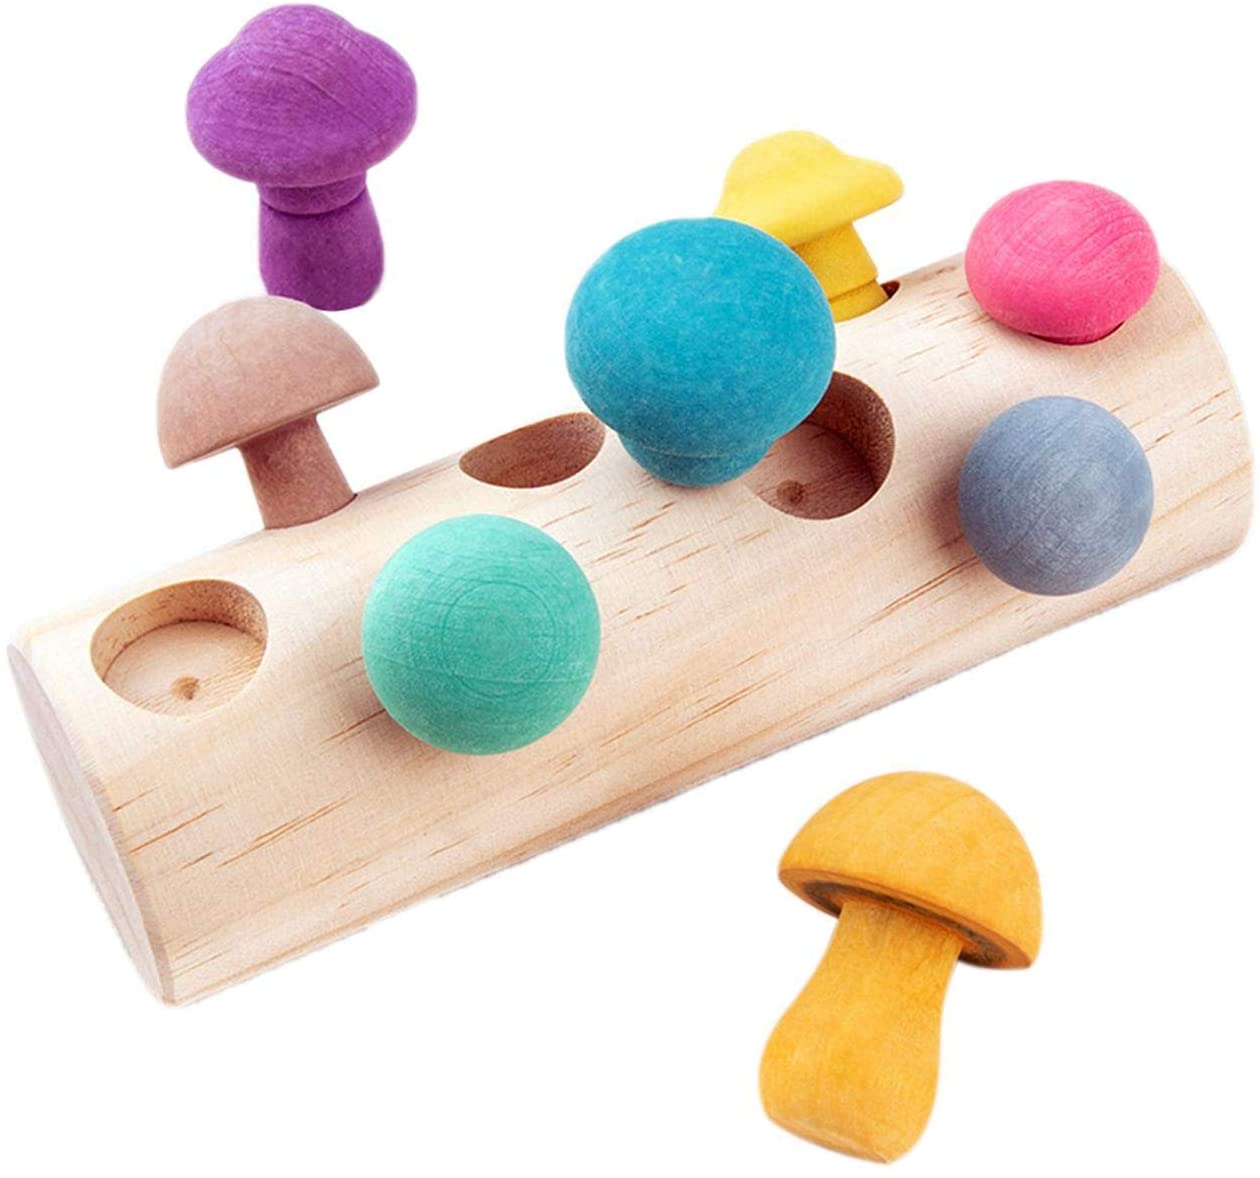 Homealexa Holz Geoboard Set Geometriebrett Montessori Holz Spielzeug für 